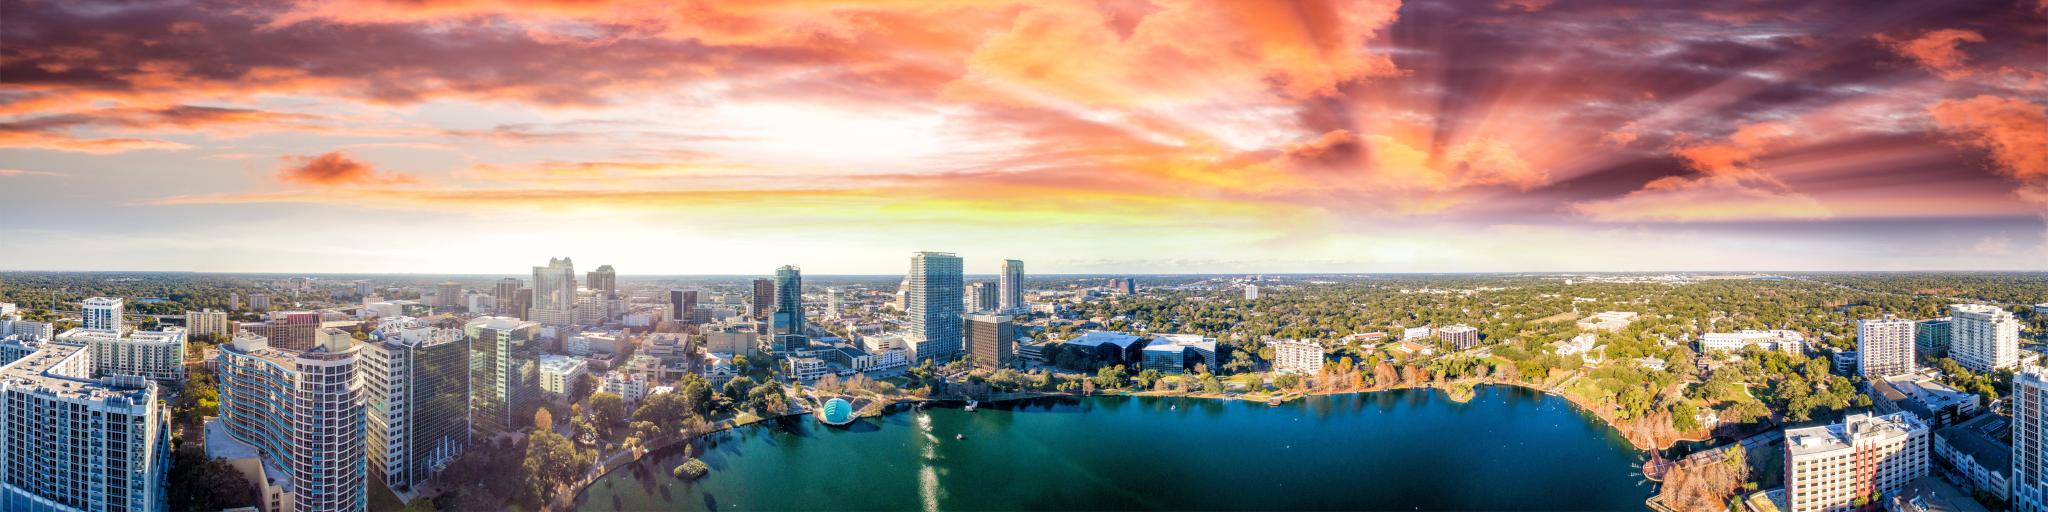 Panorama of Lake Eola and the city of Orlando, Florida.